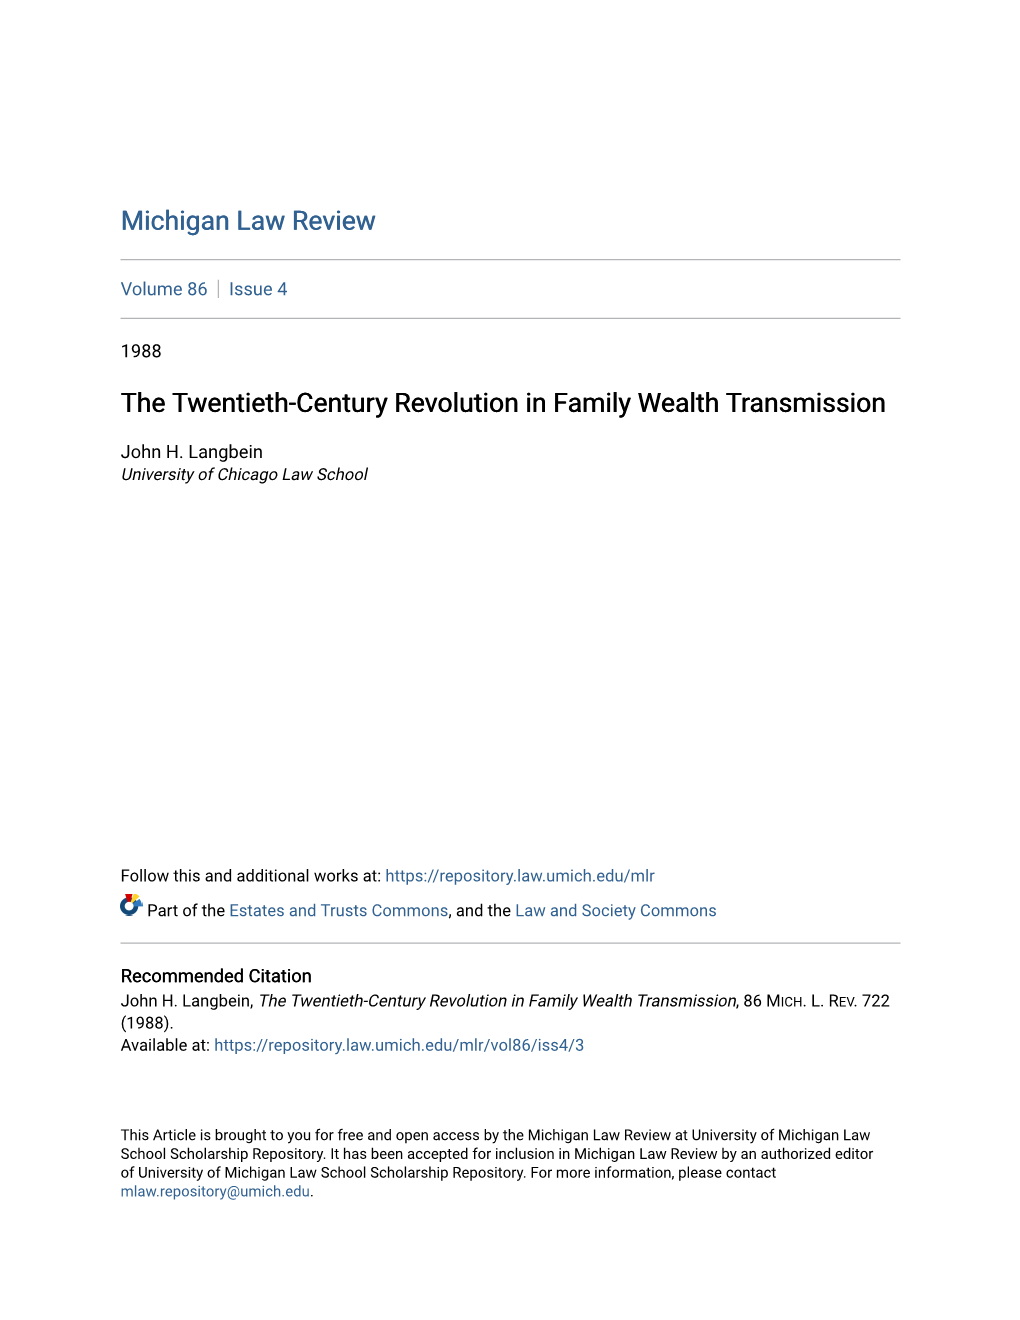 The Twentieth-Century Revolution in Family Wealth Transmission